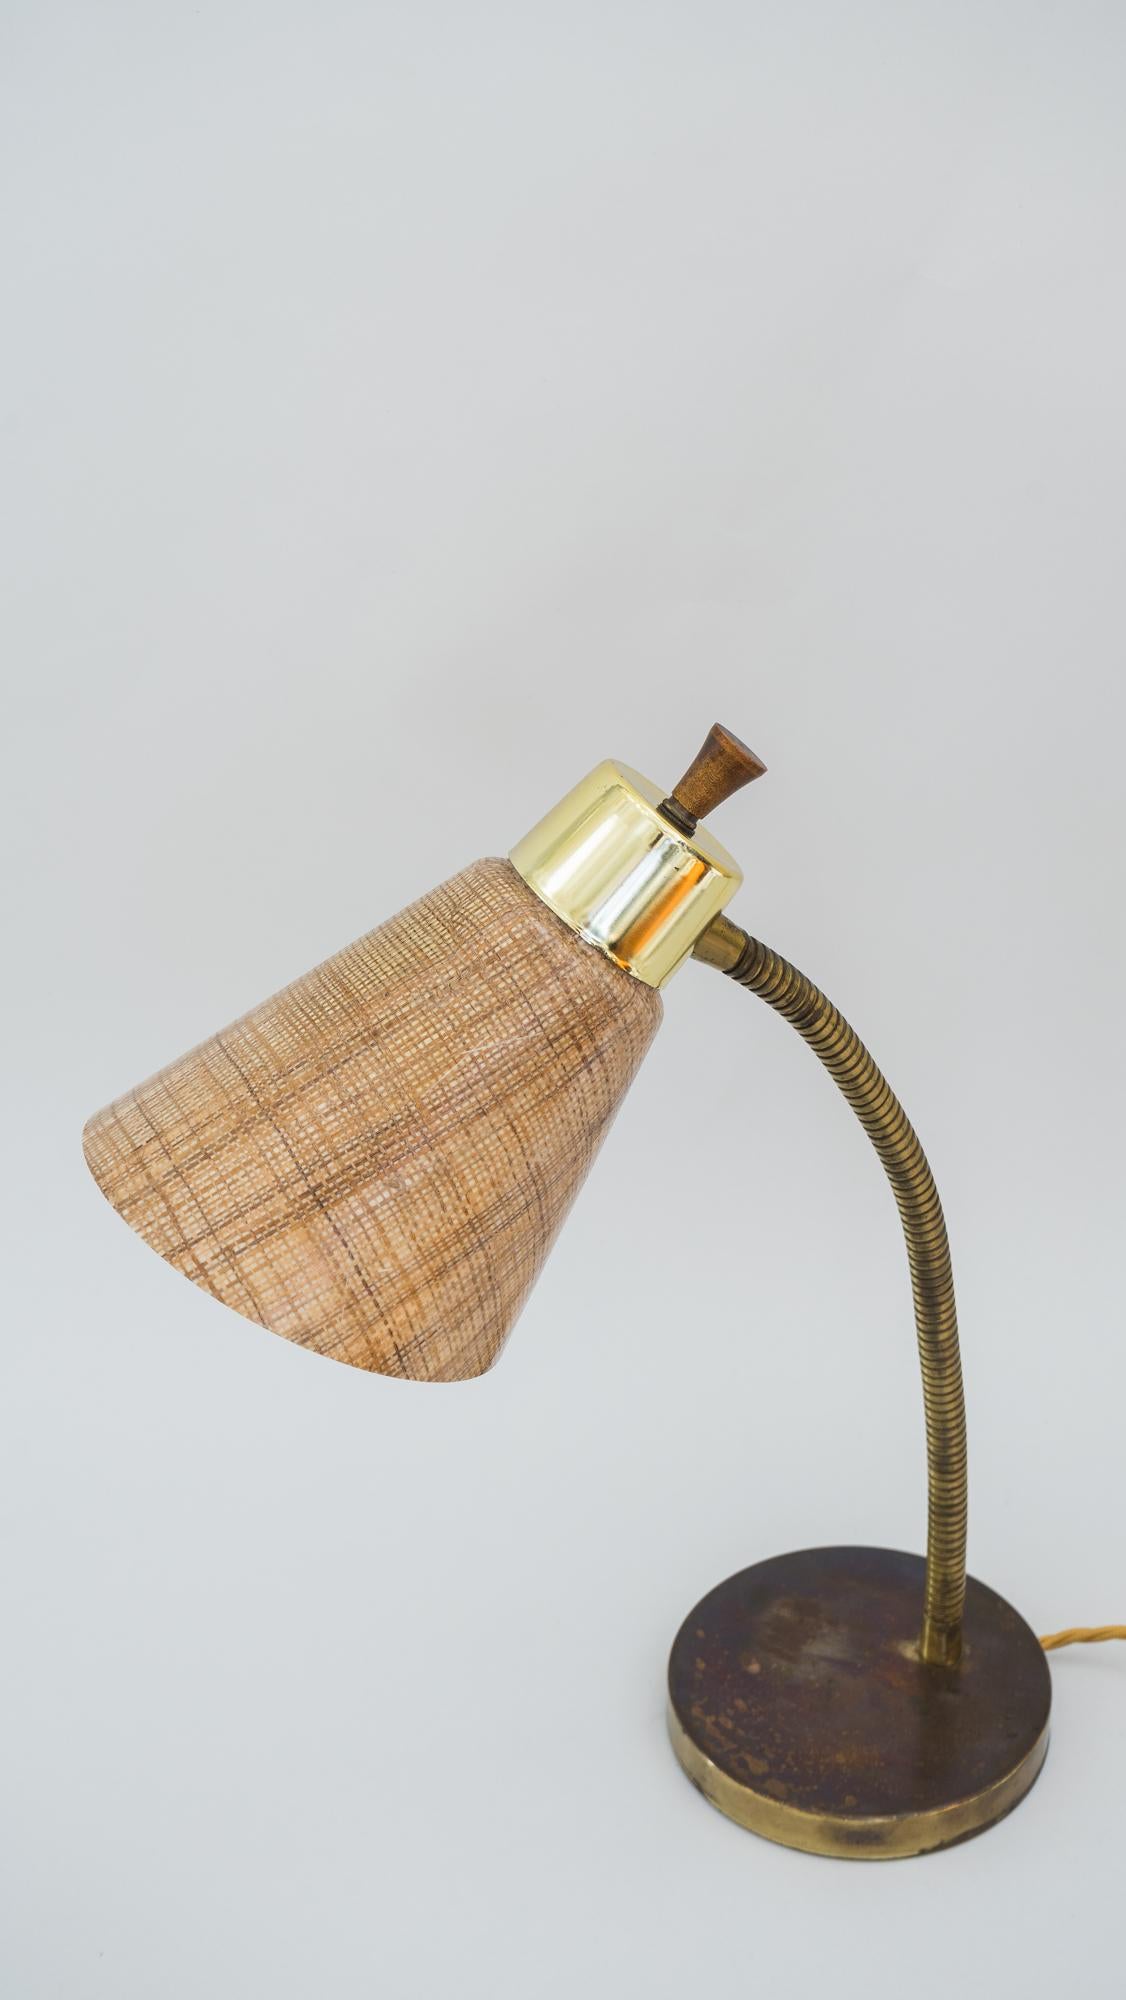 Vintage table lamp, Italian, circa 1960s
Polyester shade
Original condition.